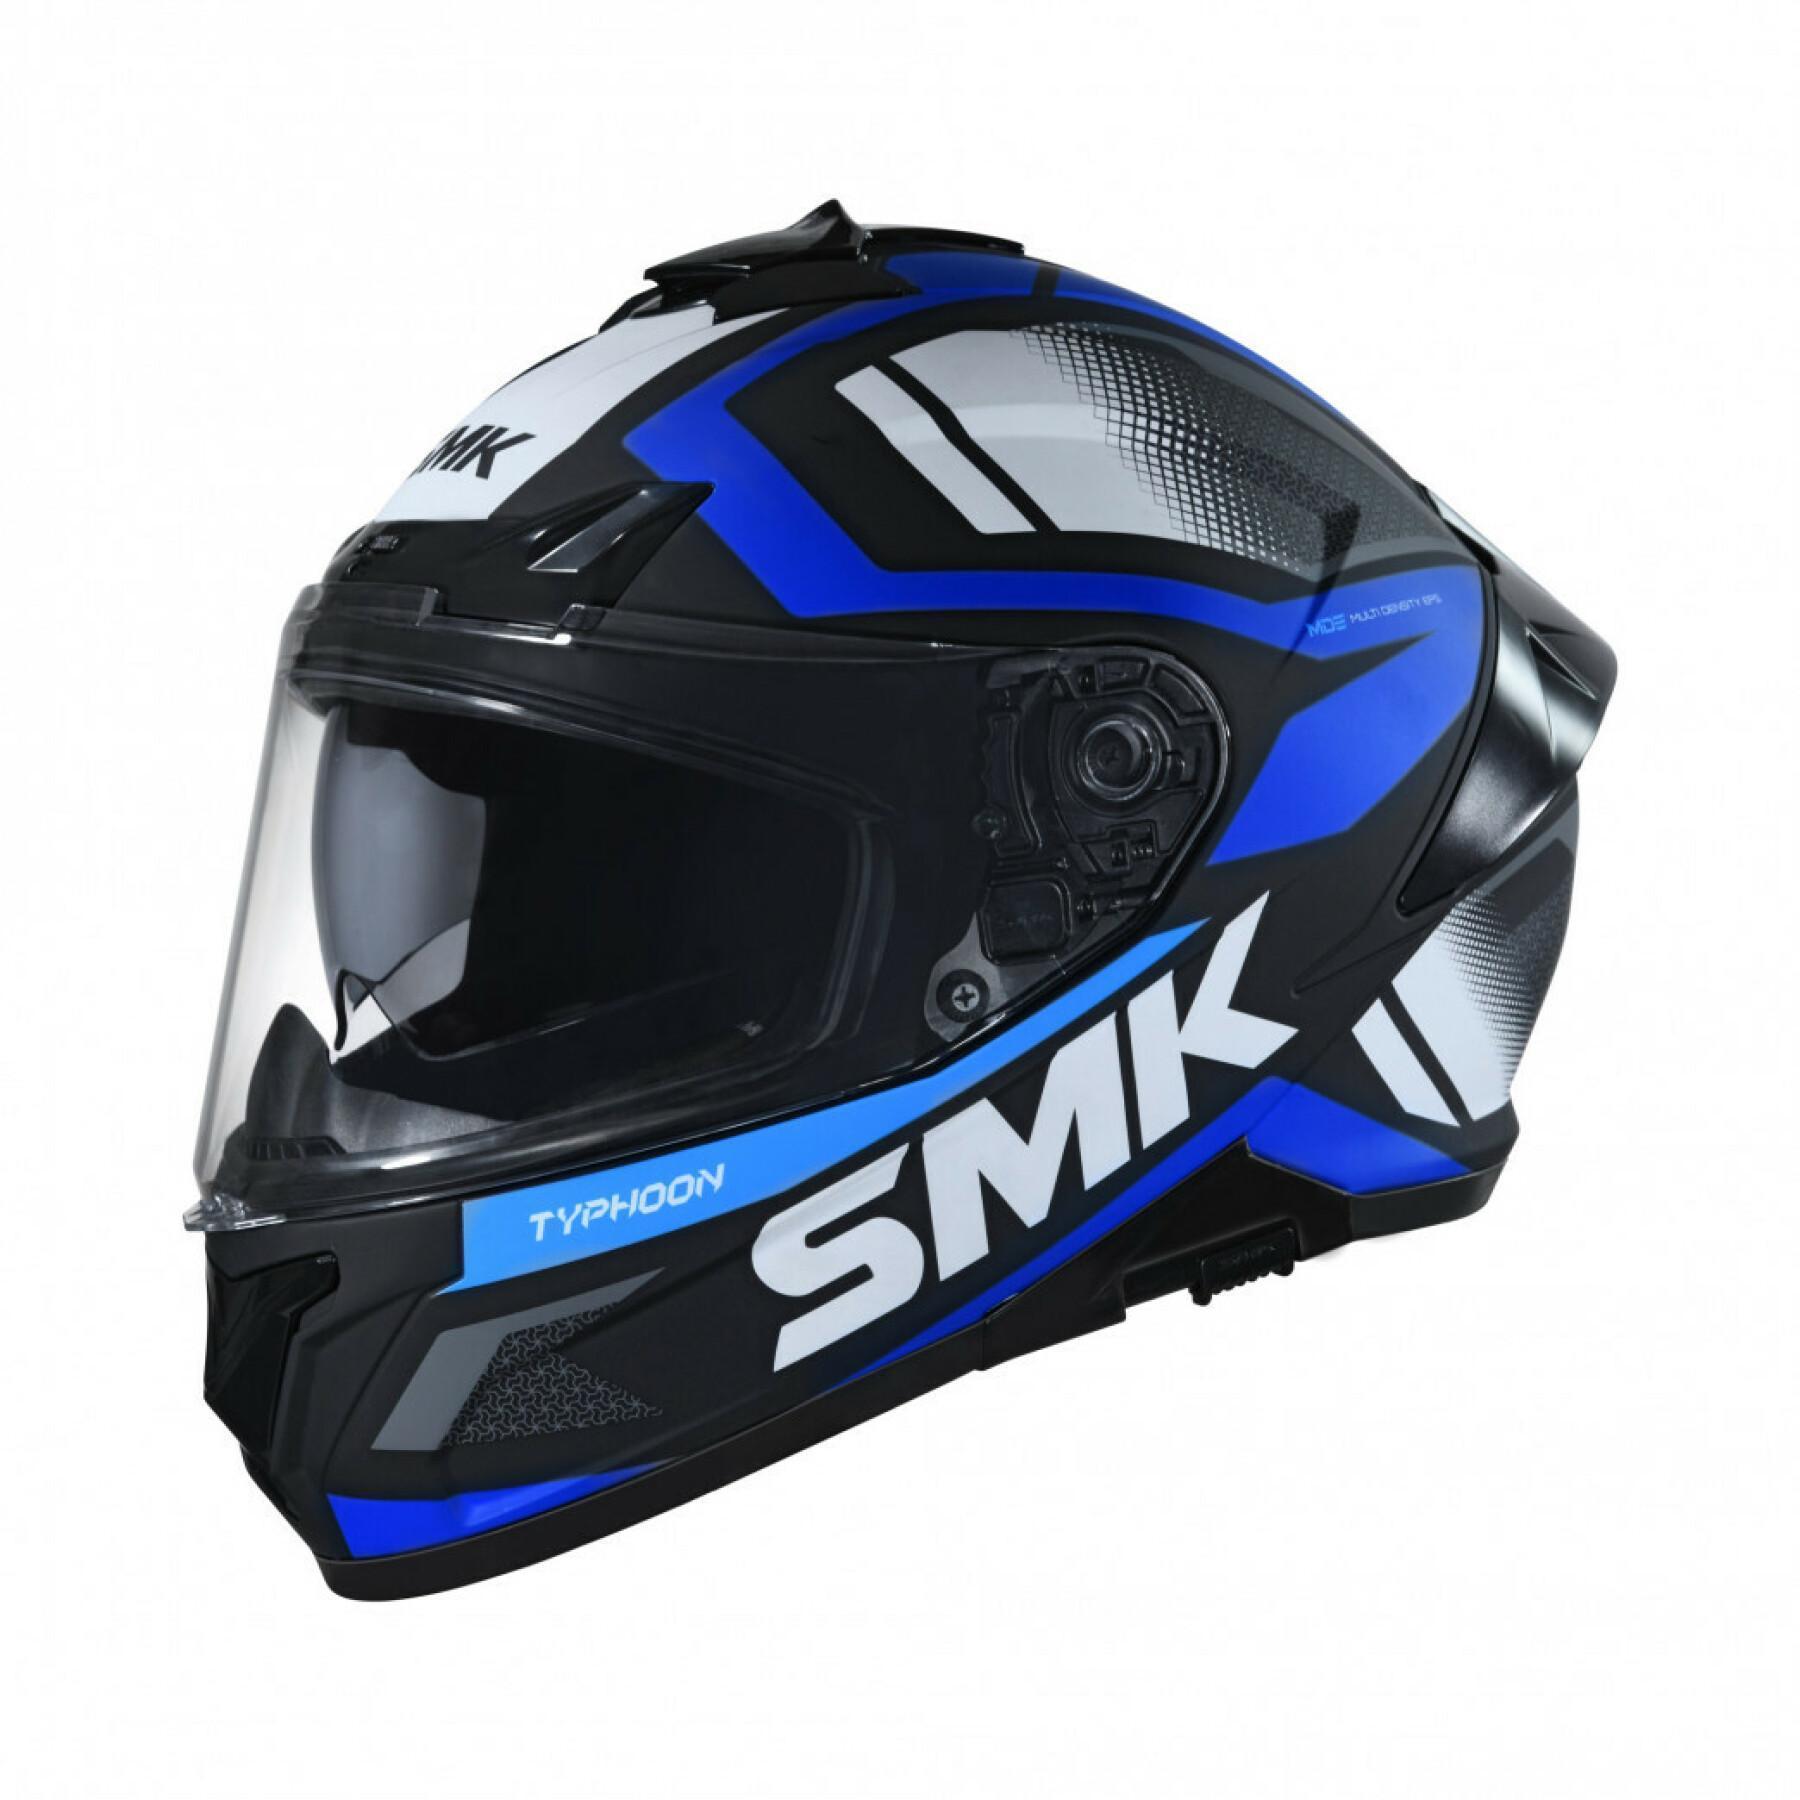 Full face motorcycle helmet SMK Typhoon Thorn